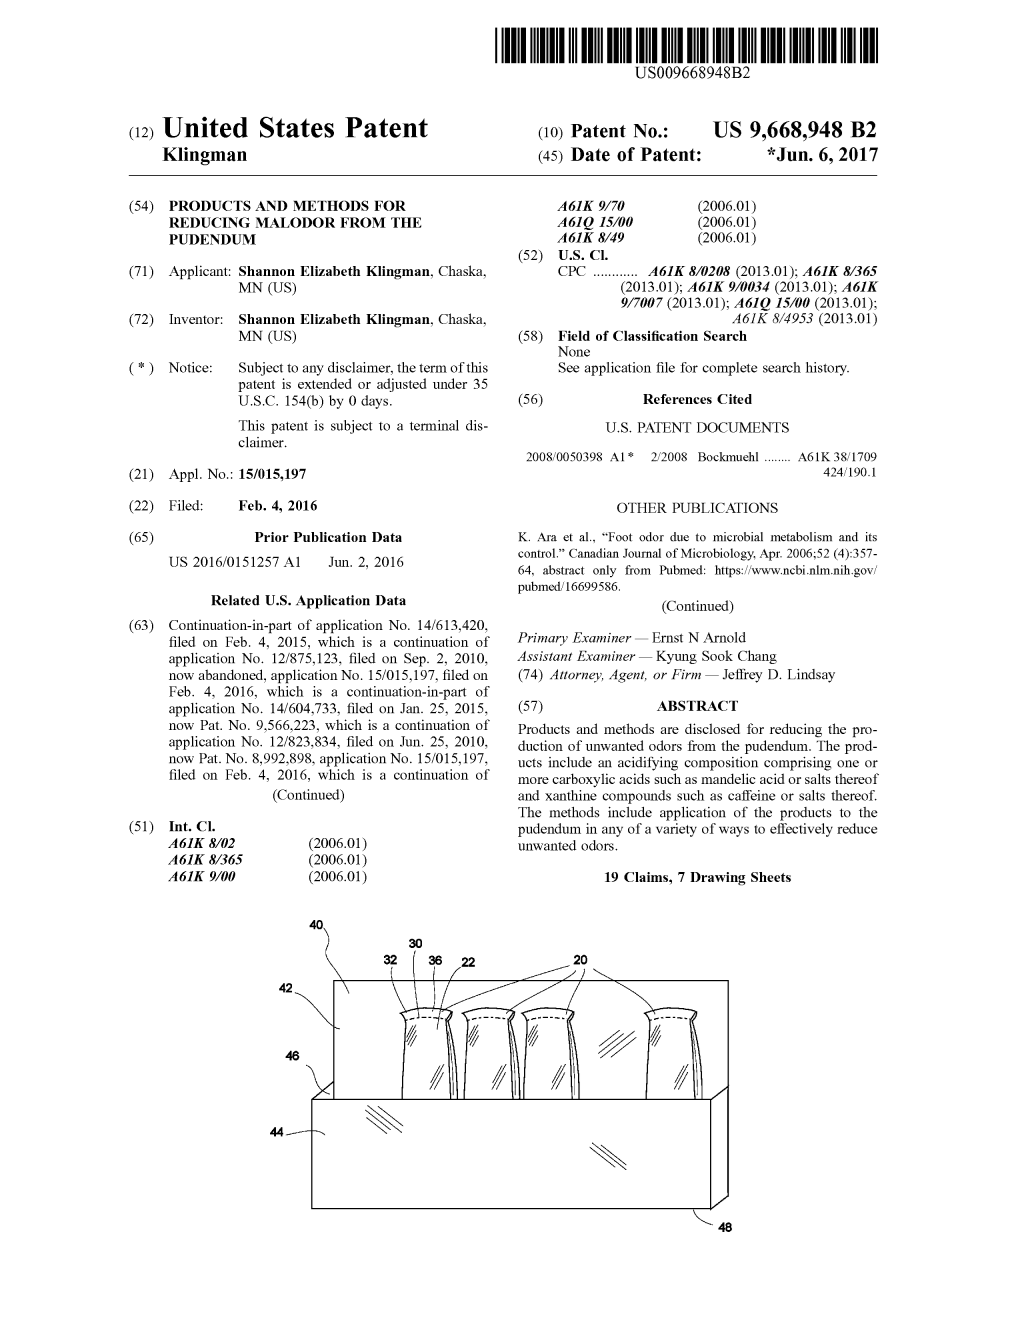 (12) United States Patent (10) Patent No.: US 9,668,948 B2 Klingman (45) Date of Patent: *Jun